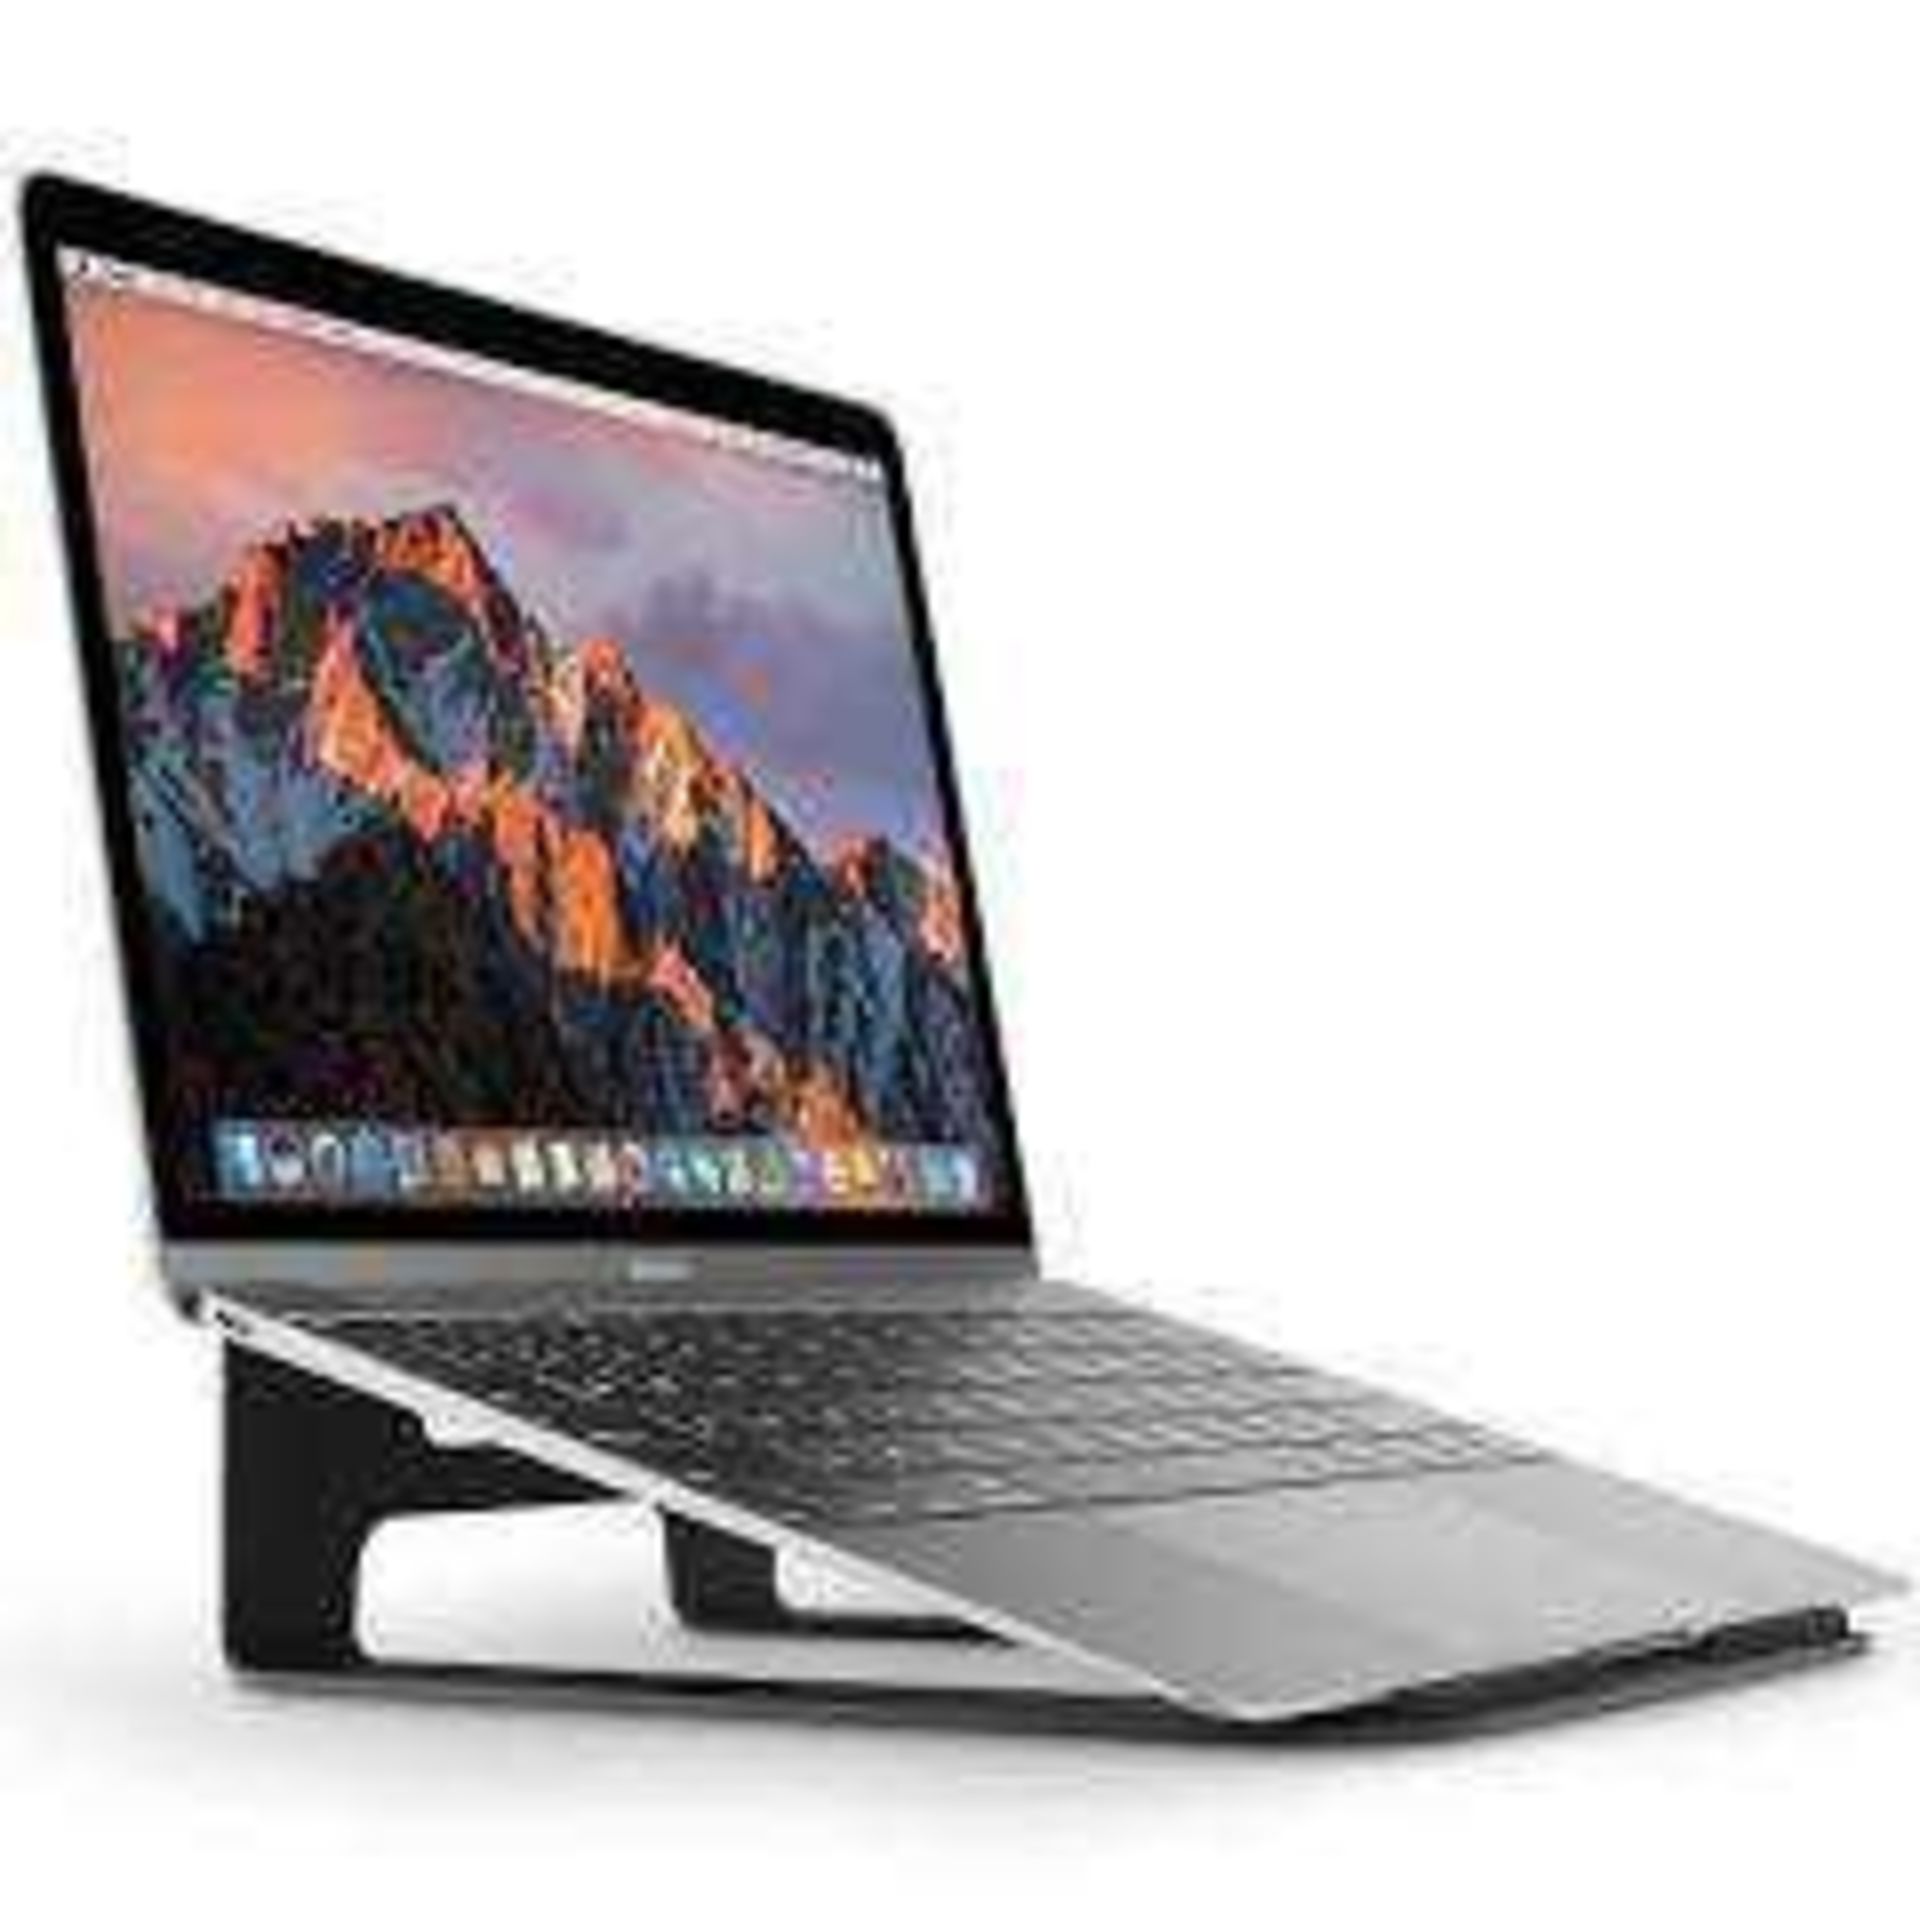 RRP £50 Each Boxed Twelve South Parc Slope Low-Profile Desktop Stand For Macbooks